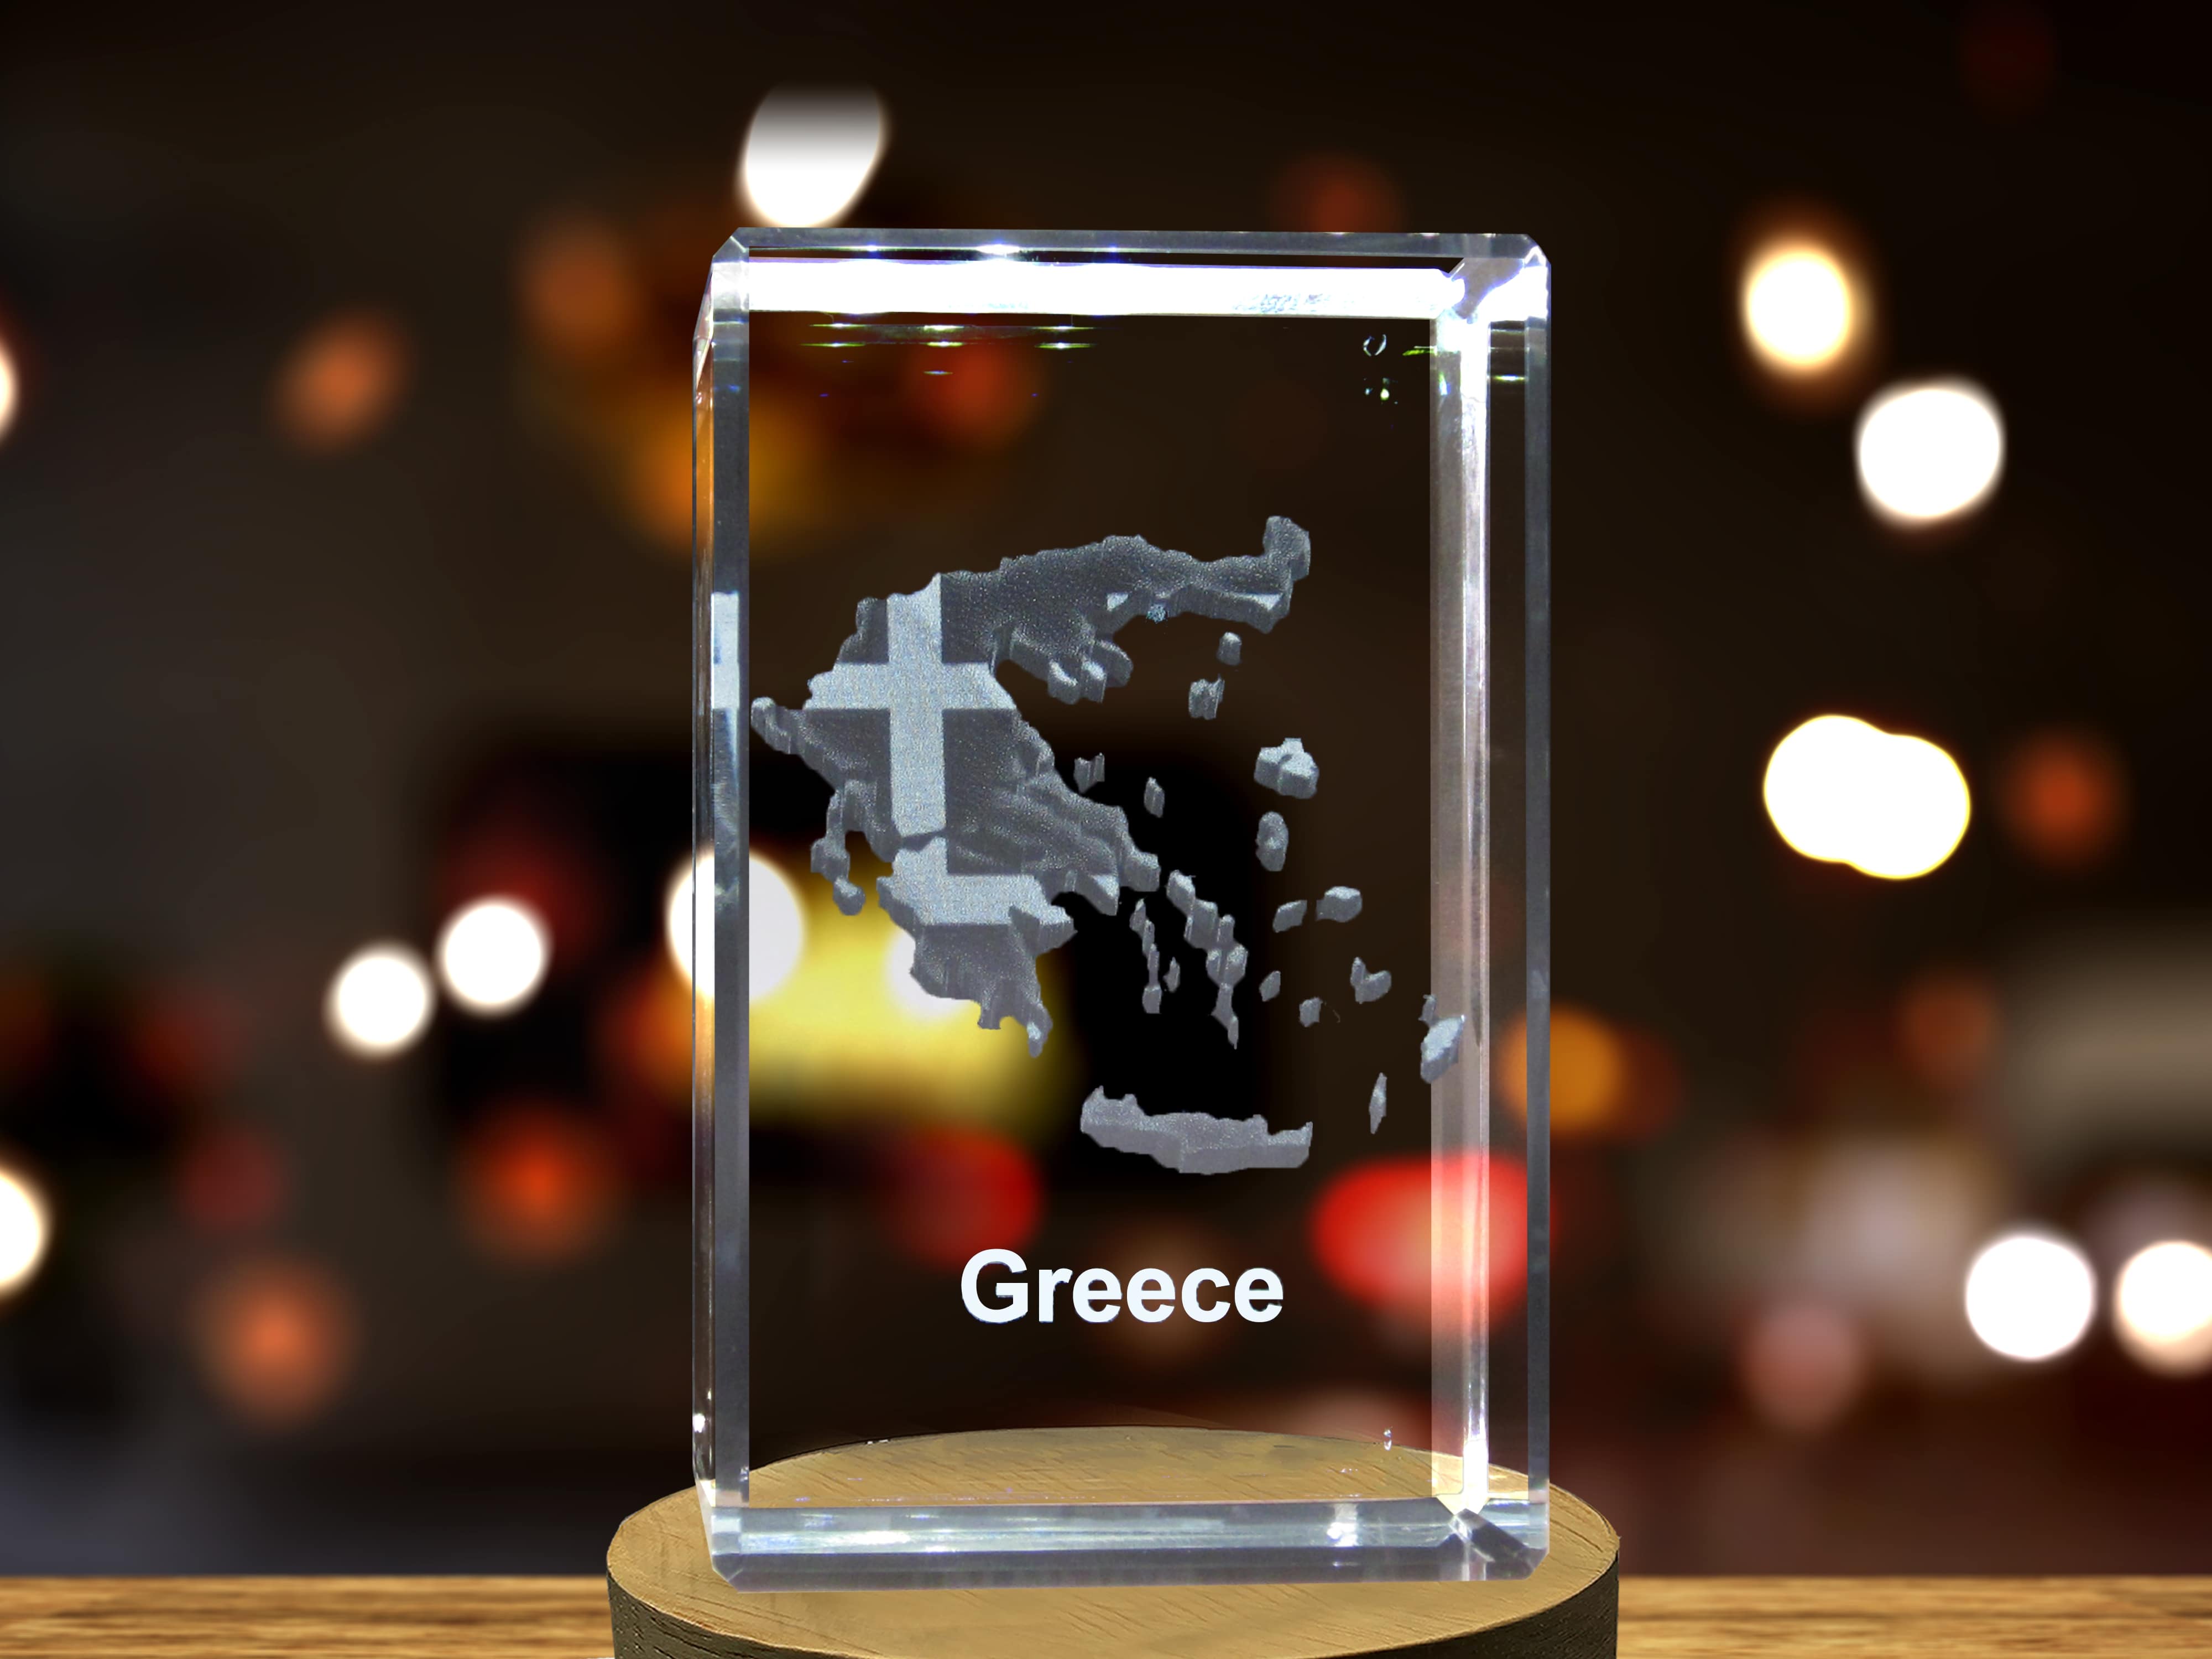 Greece 3D Engraved Crystal 3D Engraved Crystal Keepsake/Gift/Decor/Collectible/Souvenir A&B Crystal Collection